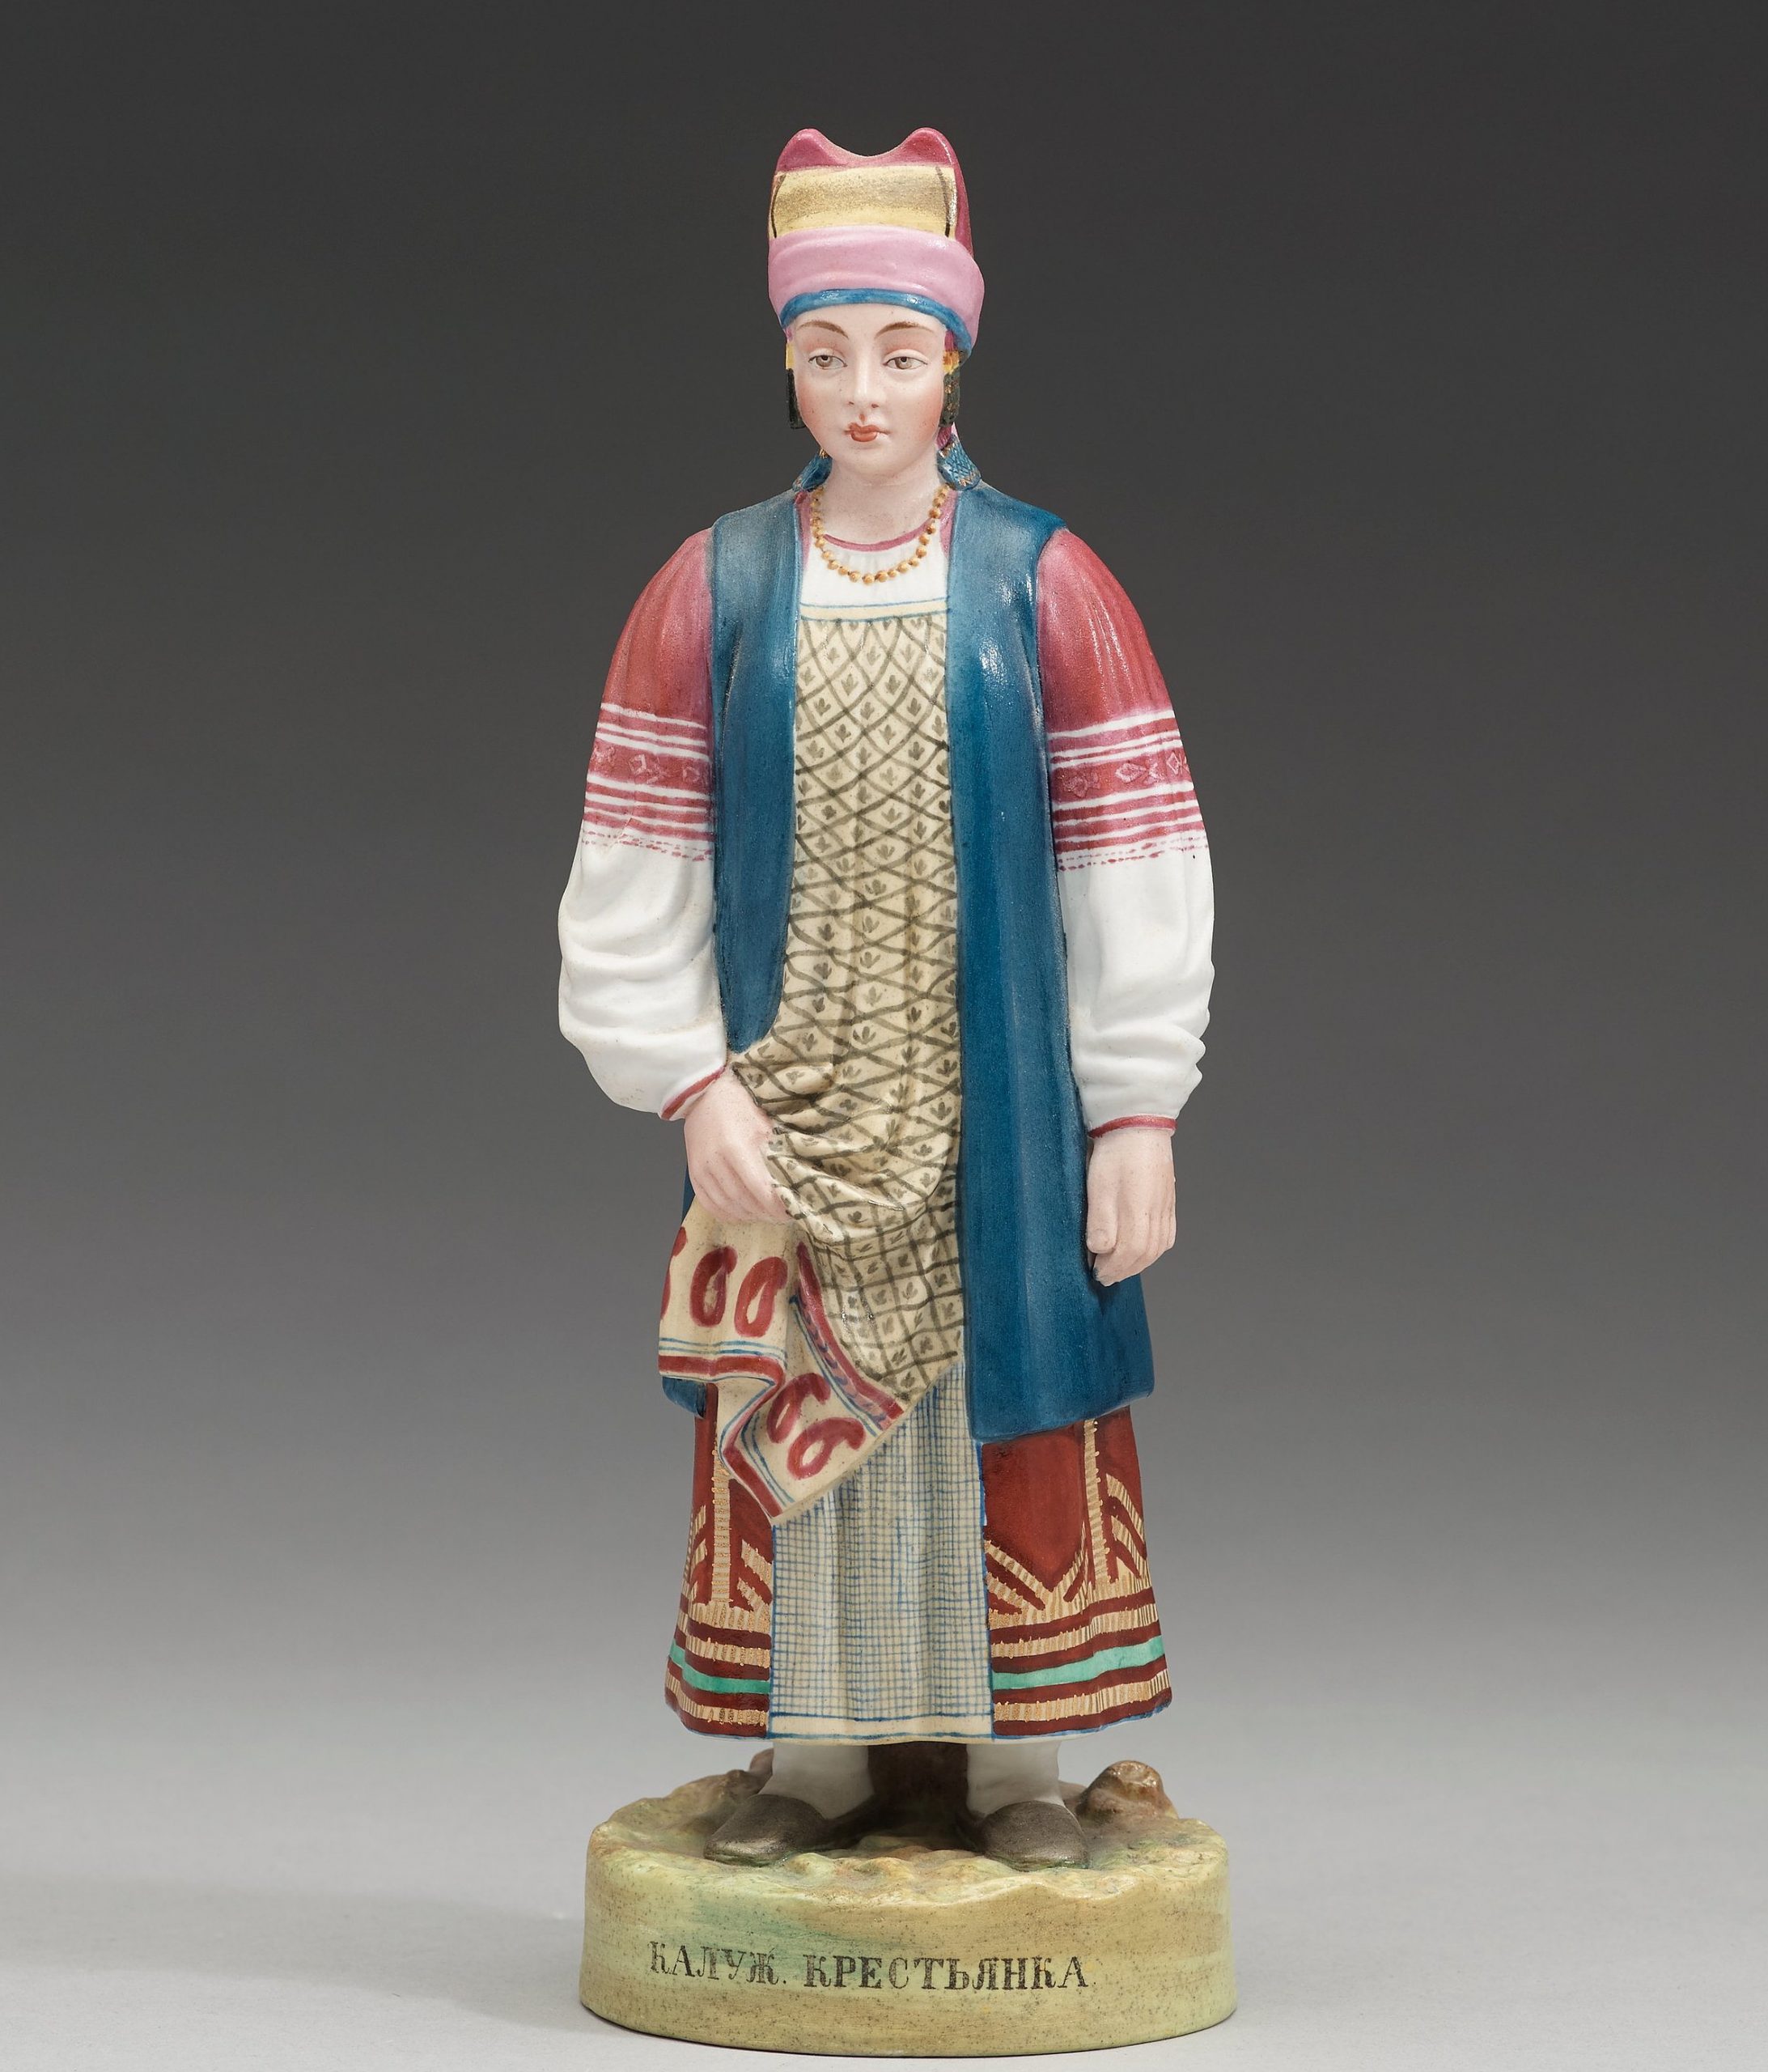 Gardner porcelain figure of Kaluga Peasant Woman from "Peoples of Russia" series